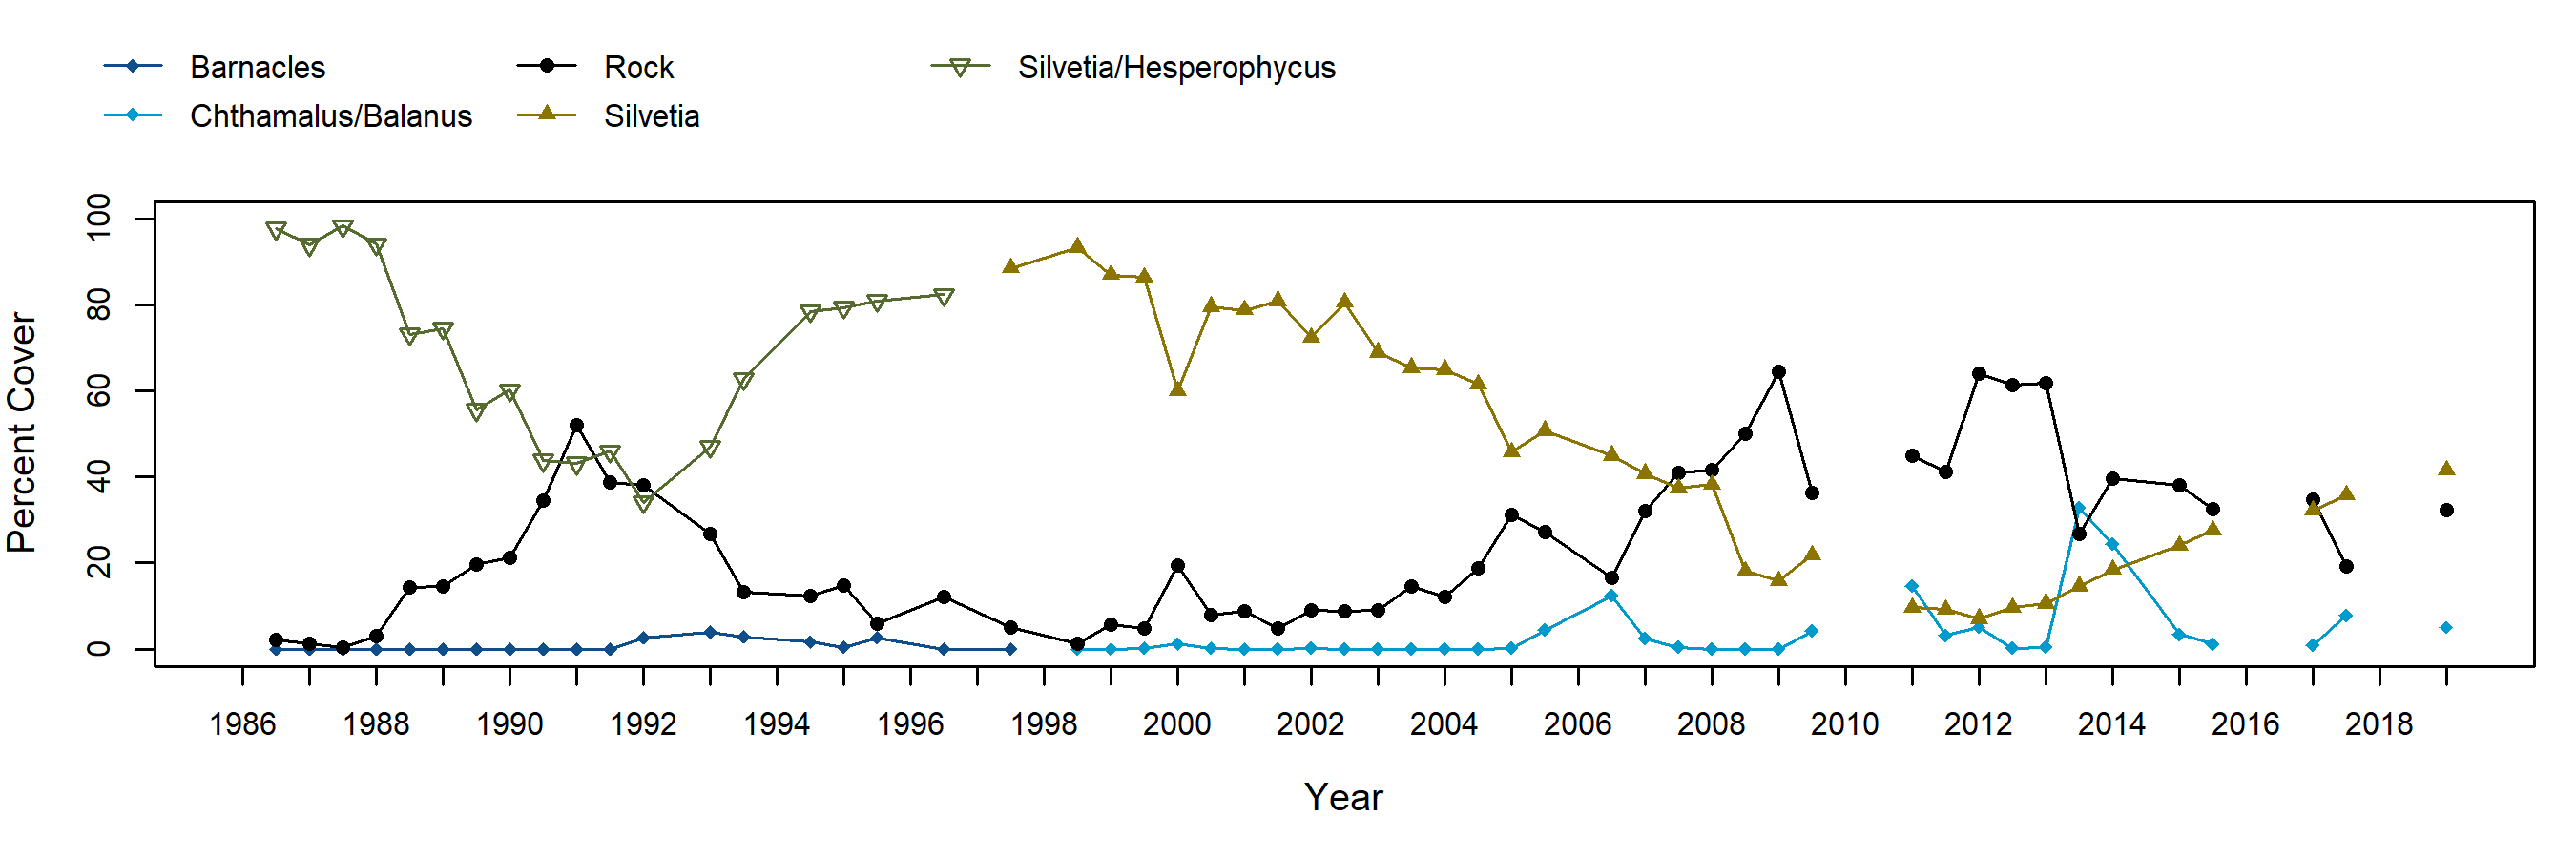 East Point Silvetia trend plot